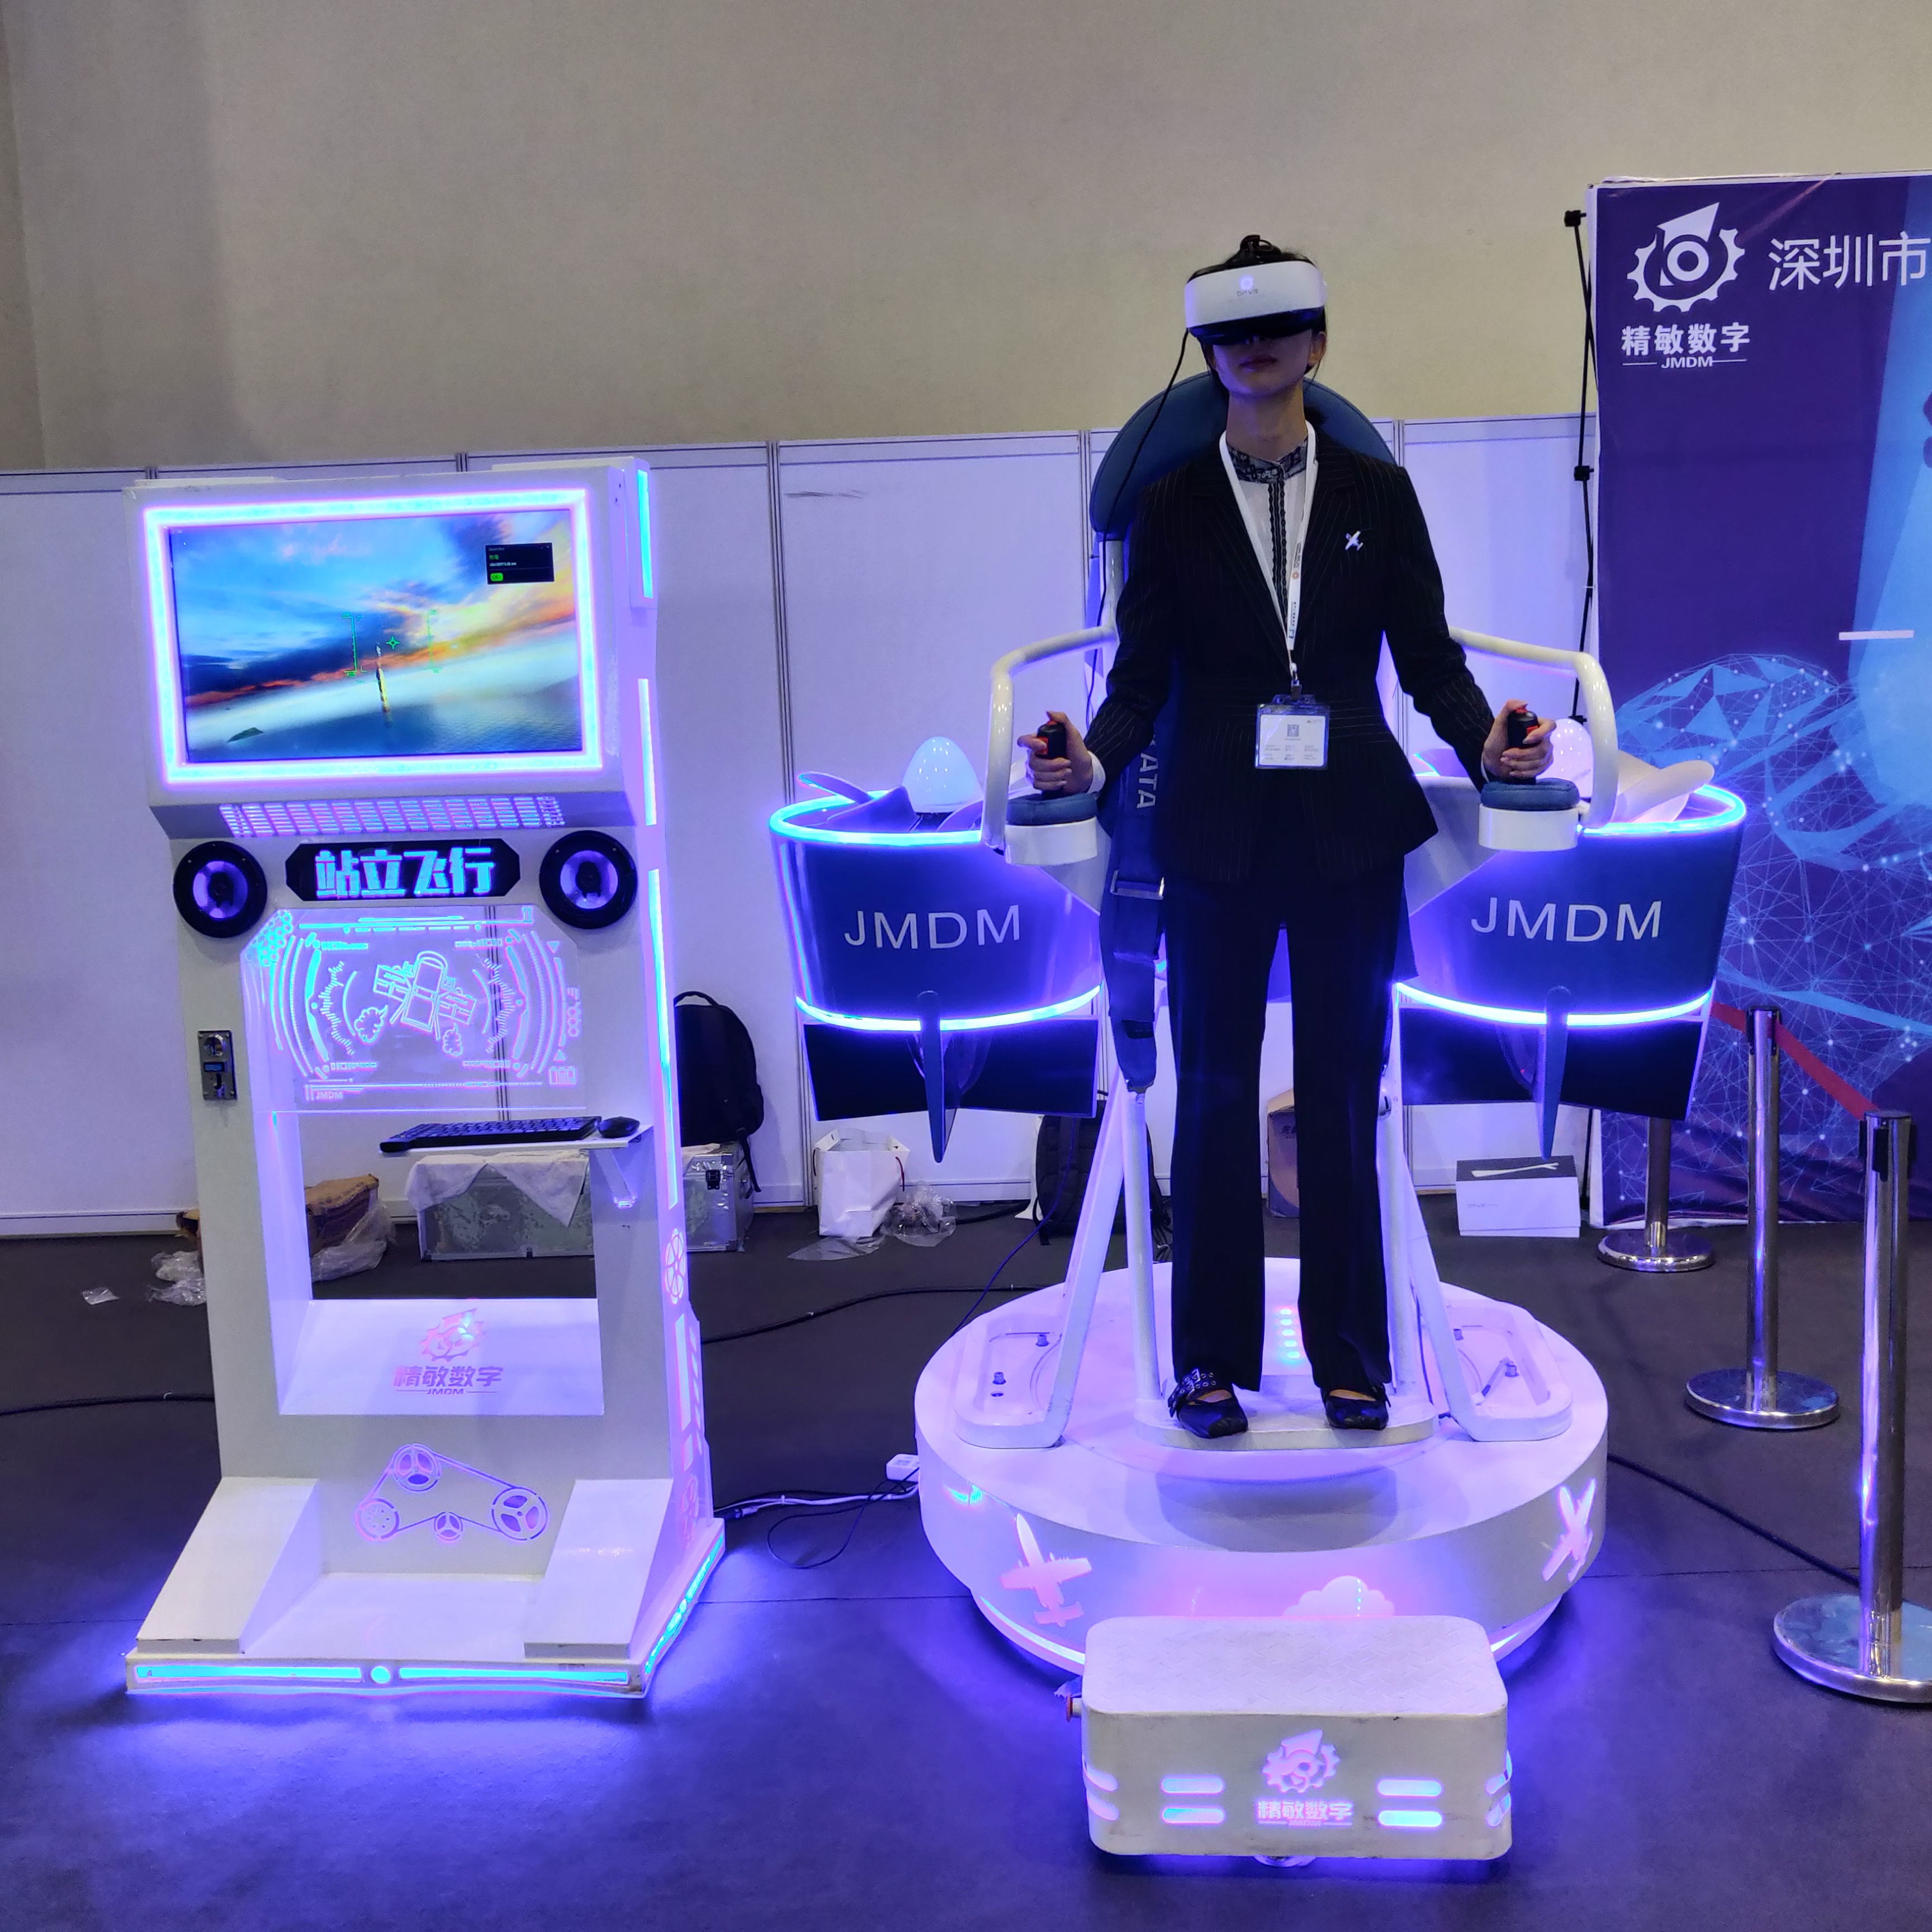 VR背包飞行器银河幻影VR游戏科普设备厂商VR沉浸式体验VR背包飞行器整套价格